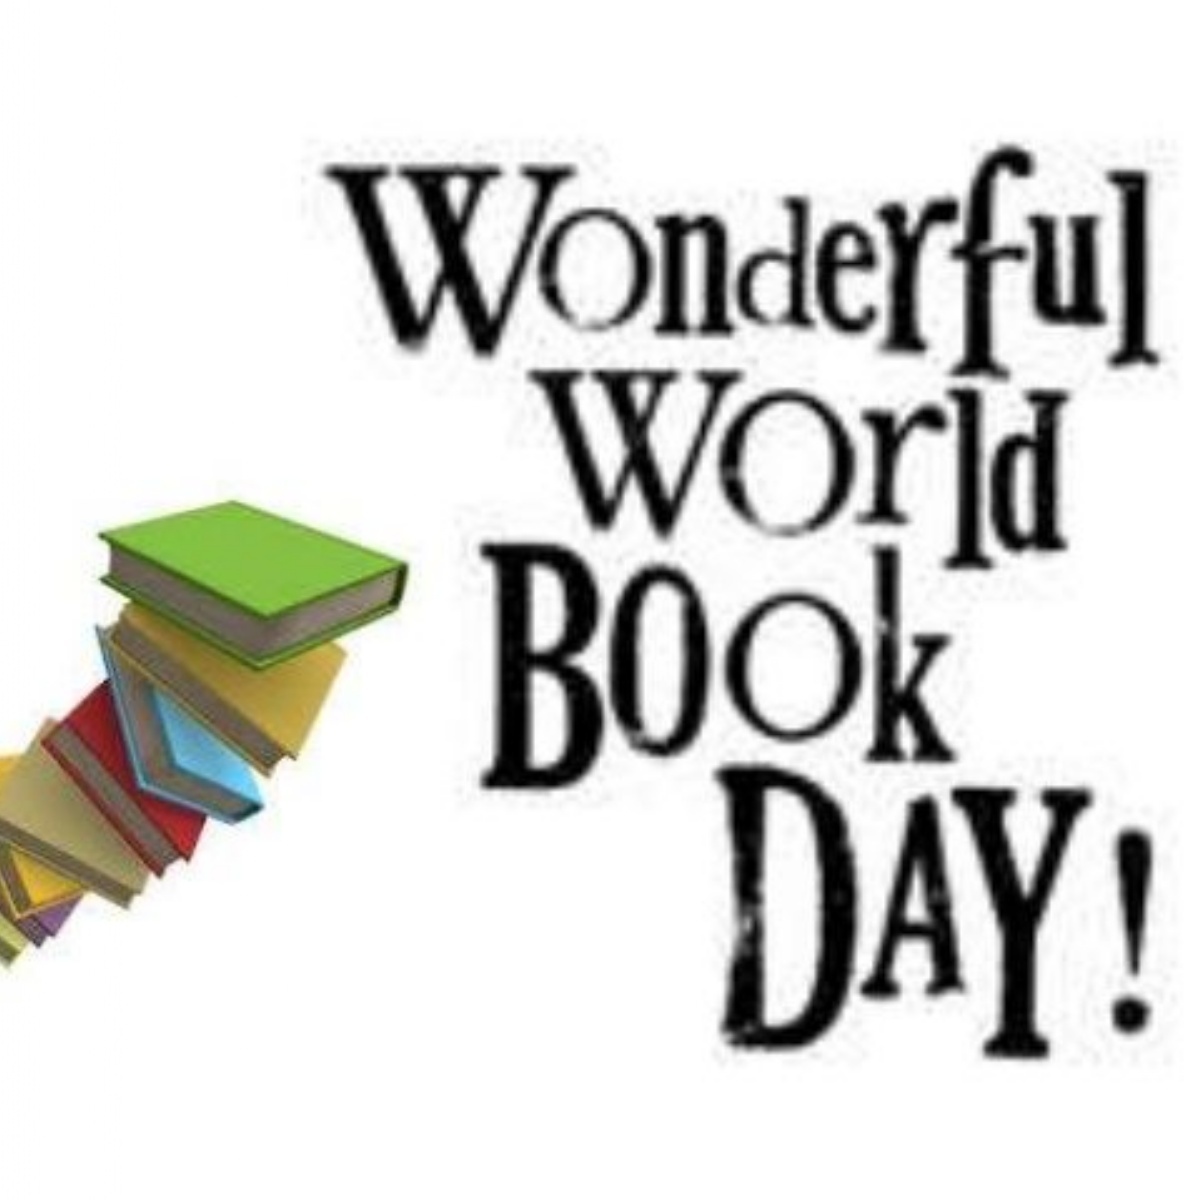 Best world books. The wonderful World book. World book Day надпись. Book World логотип. Надпись Whensday book.